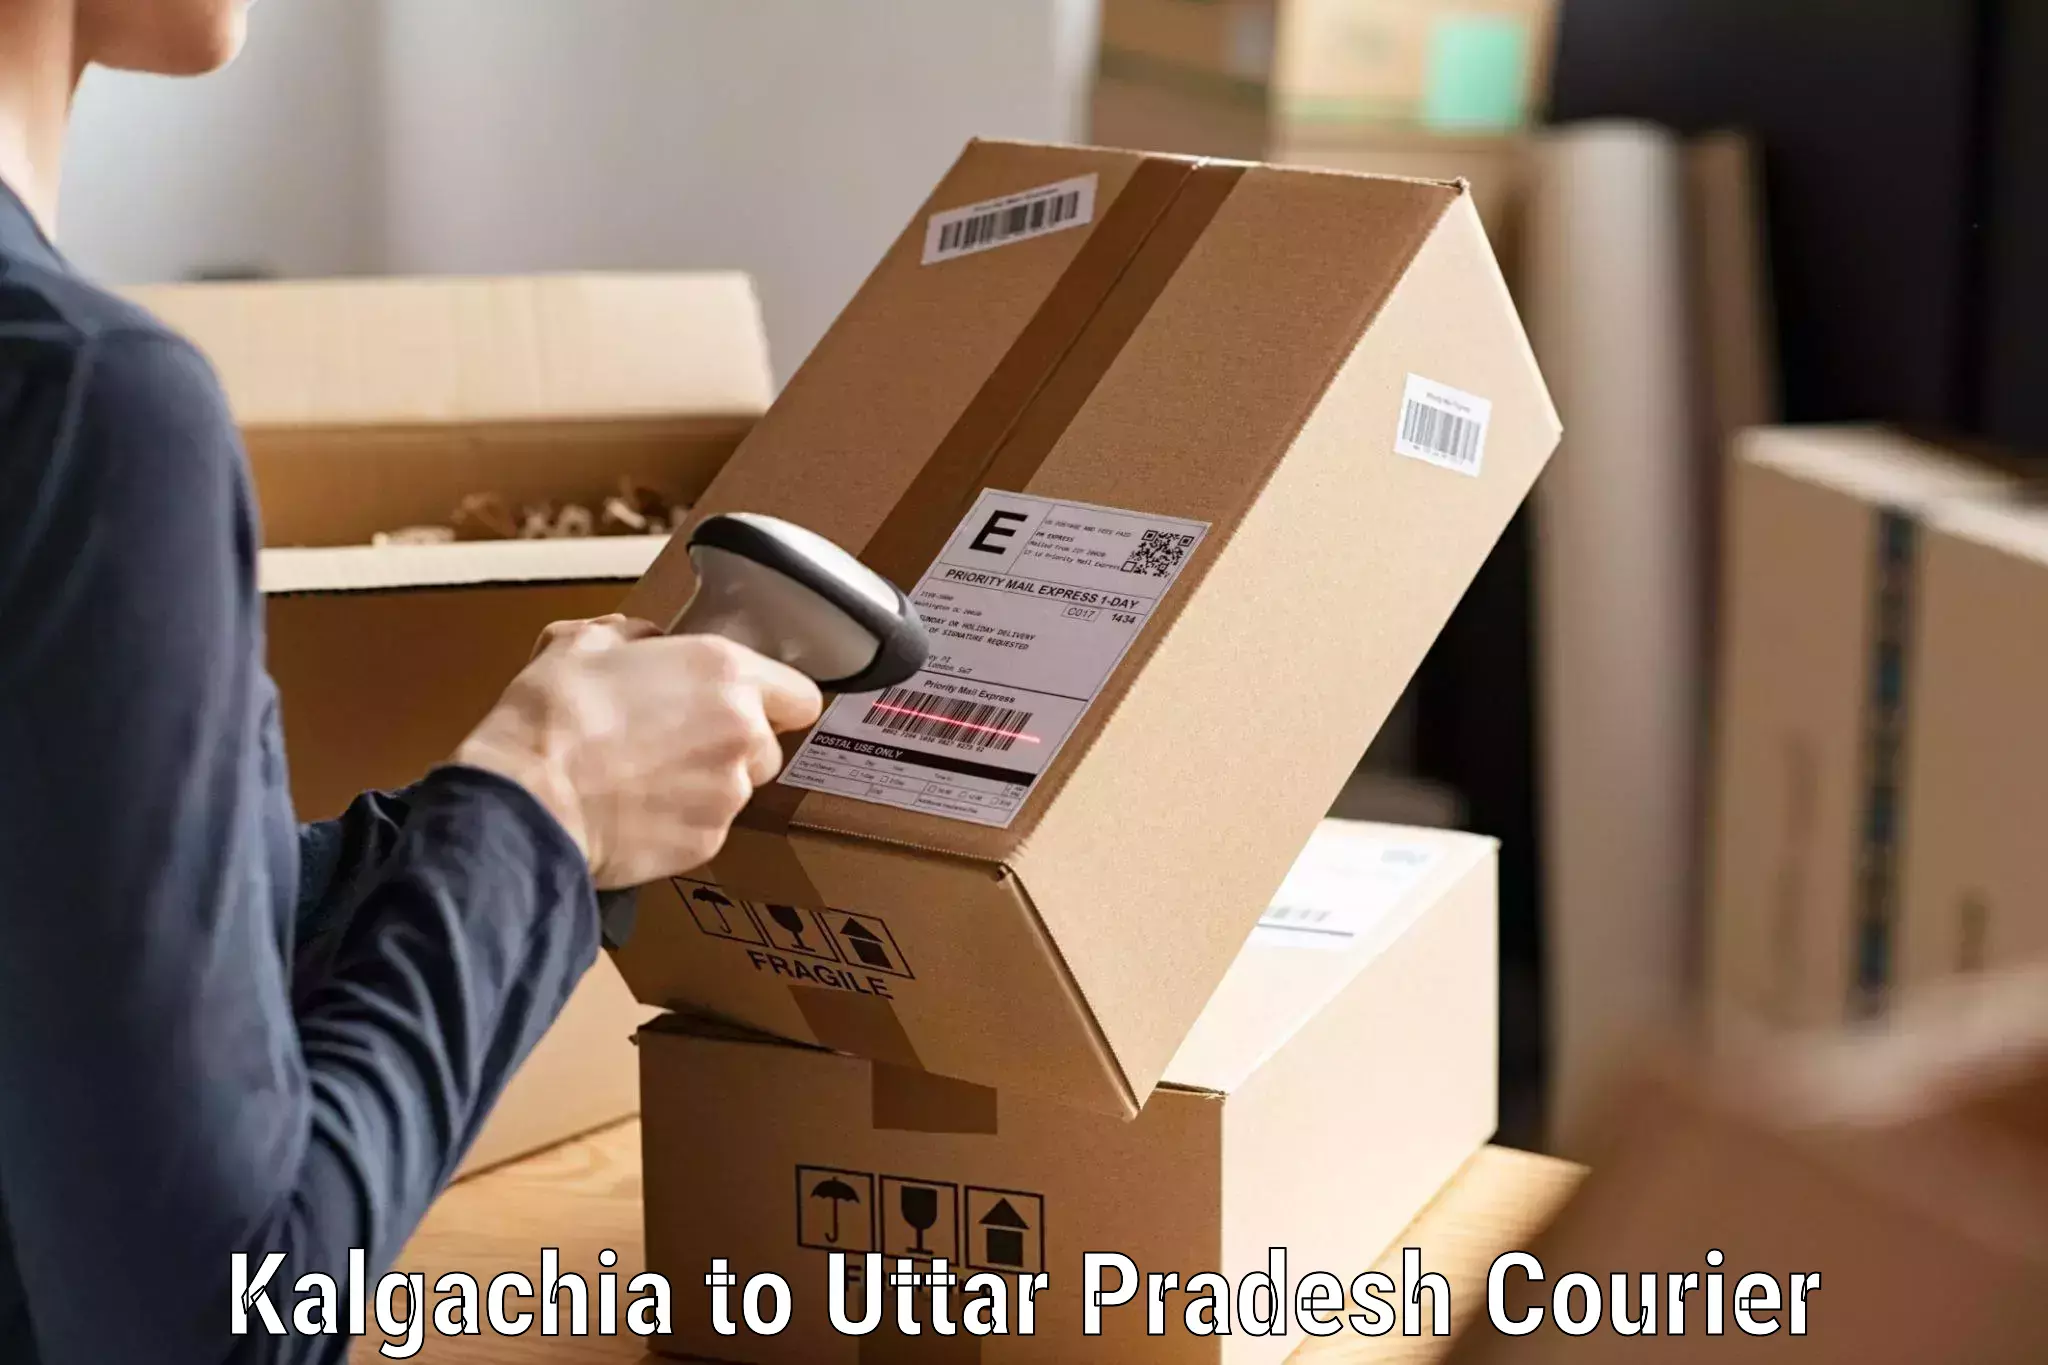 Courier service efficiency in Kalgachia to Uttar Pradesh